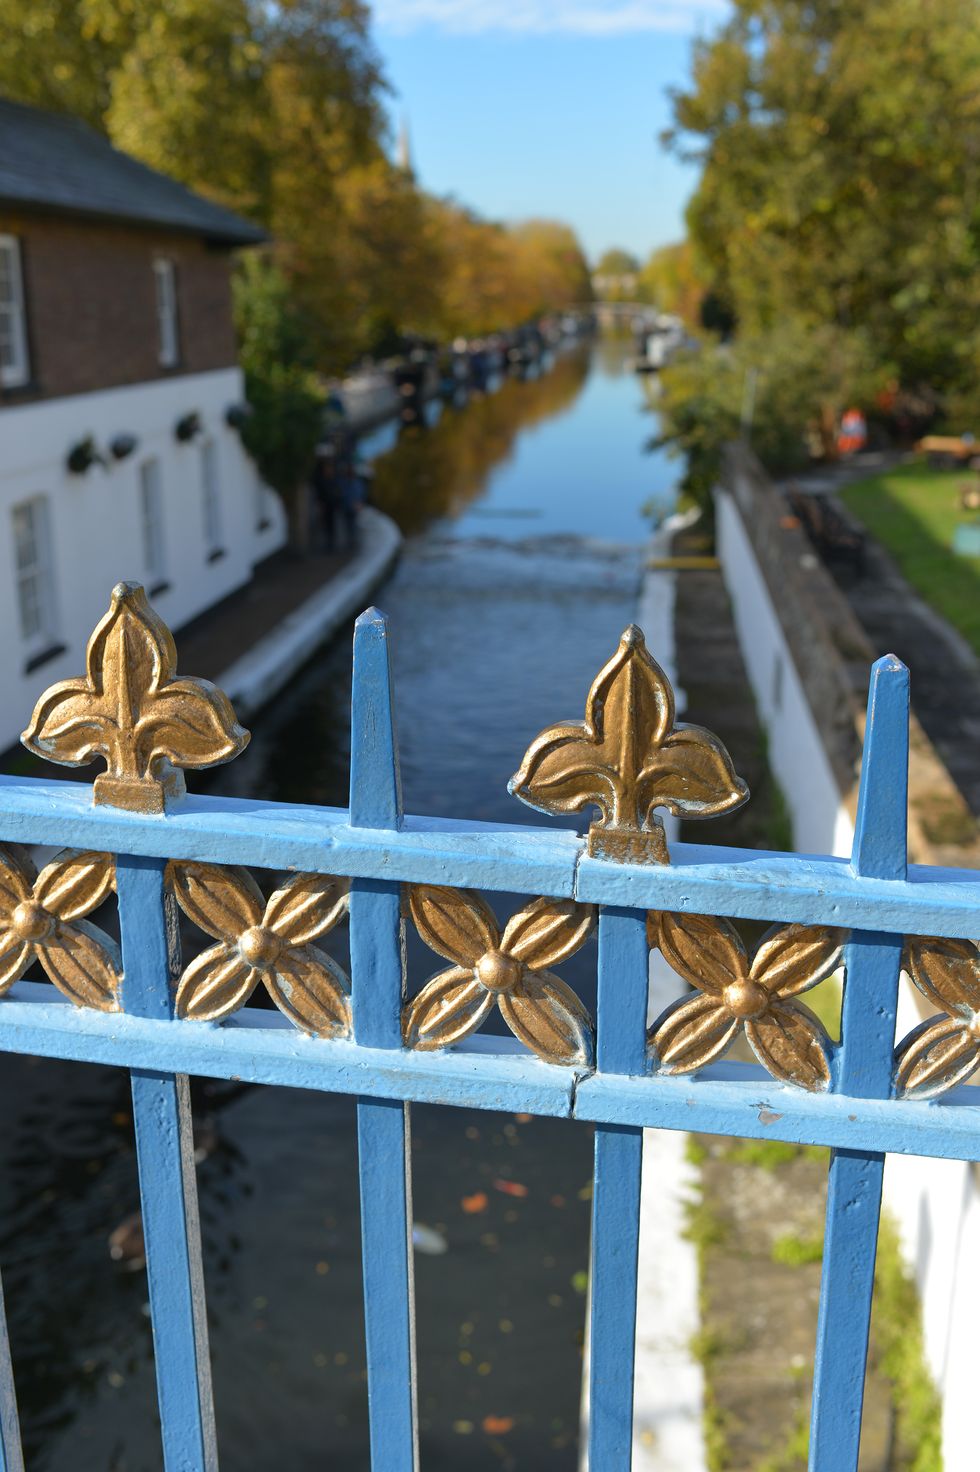 Waterway, Guard rail, Canal, Reflection, Iron, Padlock, Wheel, Fence, Metal, Leaf, 